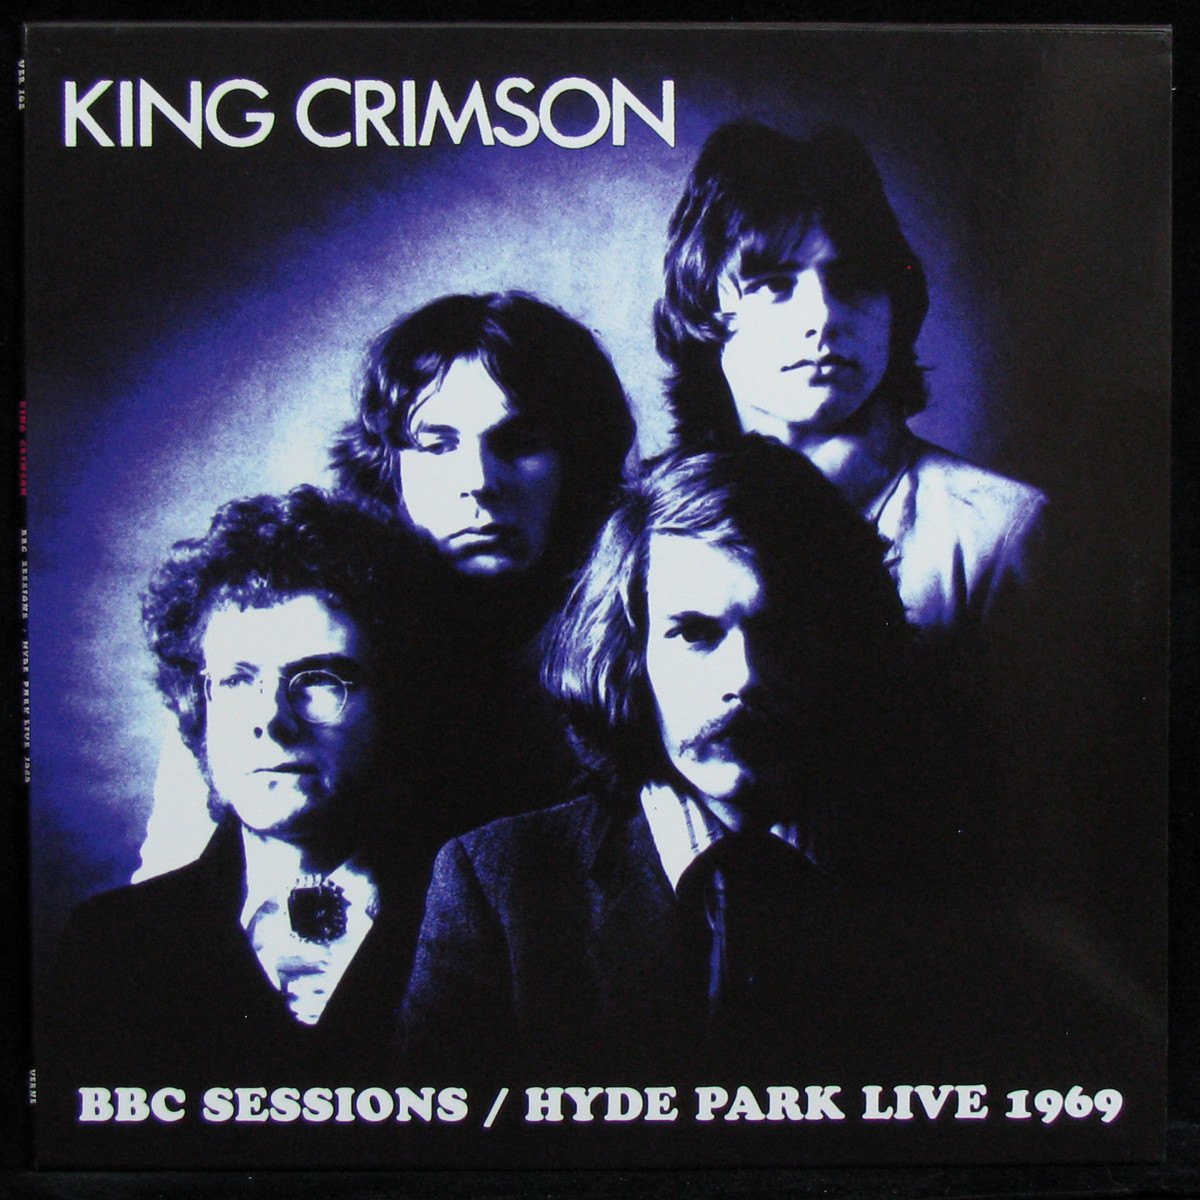 BBC Sessions / Hyde Park Live 1969